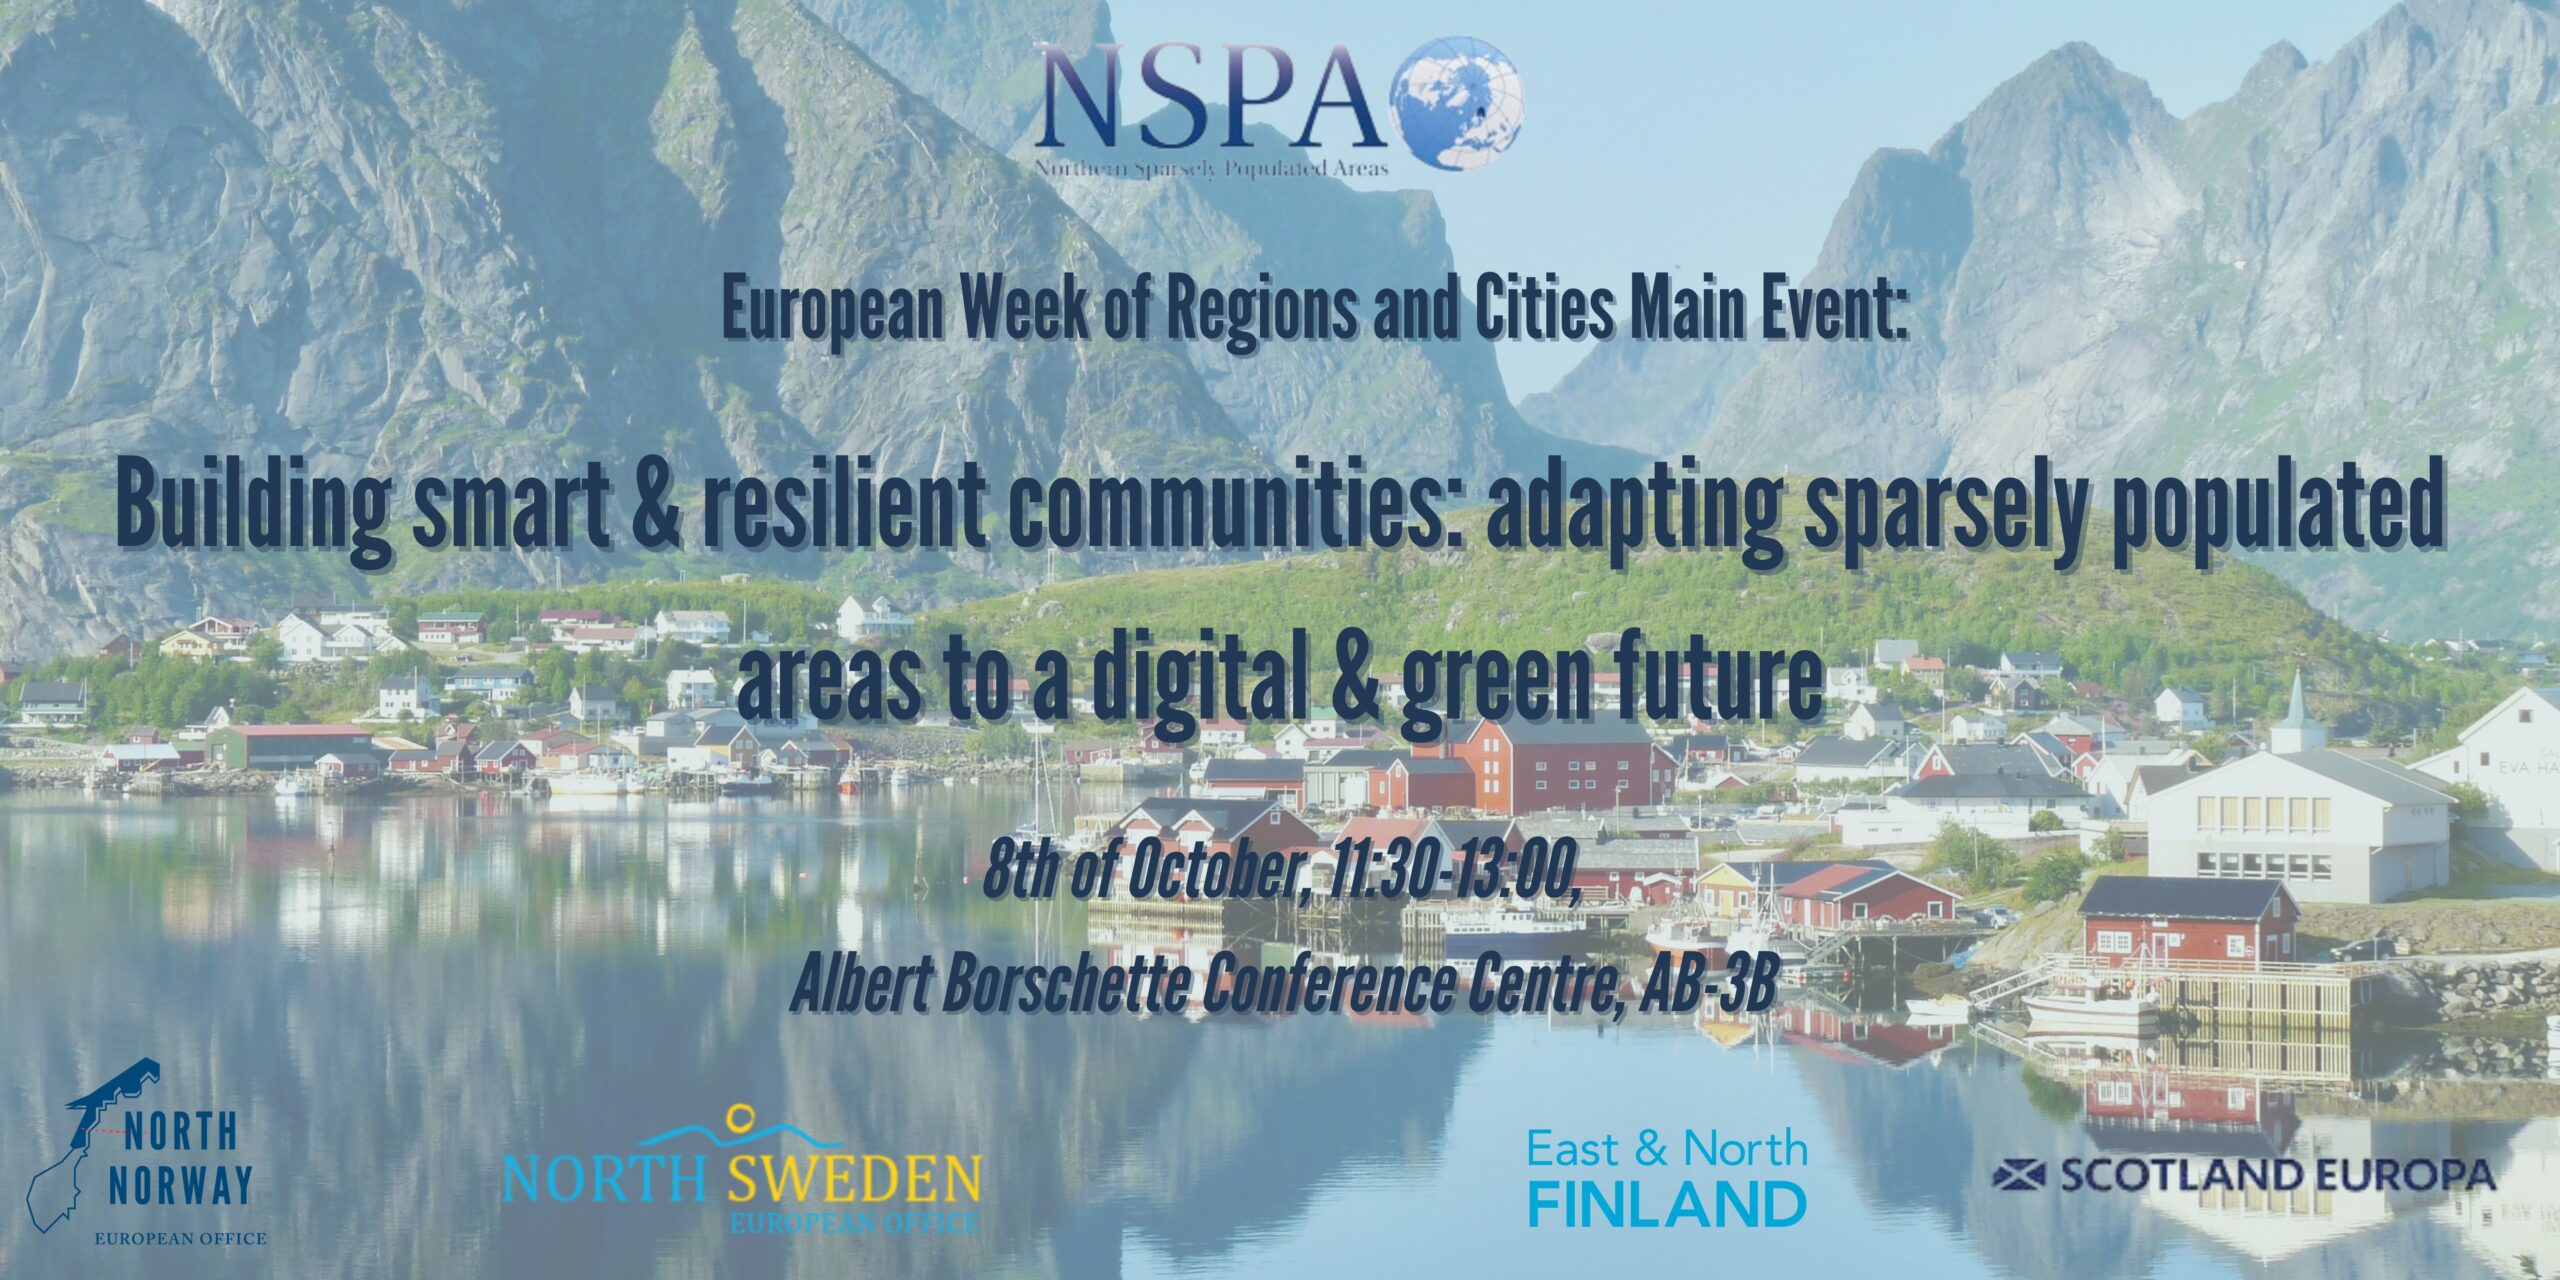 Euroopan alueiden ja kaupunkien viikon tapahtuma – Building smart & resilient communities: Adapting sparsely populated areas to a digital & green future